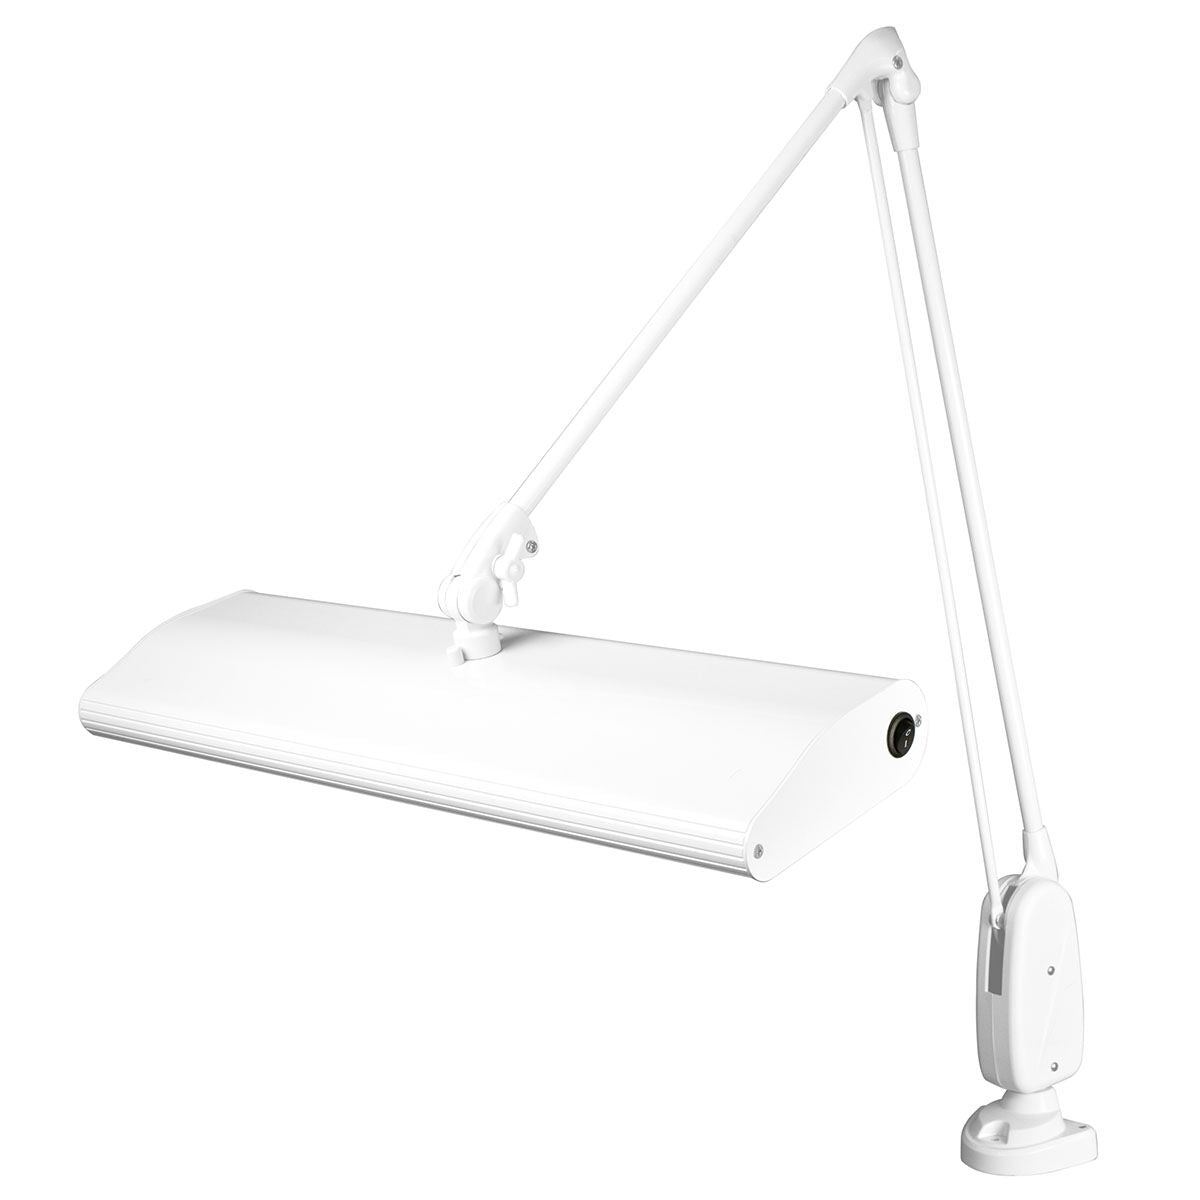 Dazor® Lumilus LED Clamp-Base Task Lamp (31" Classic Arm, White)